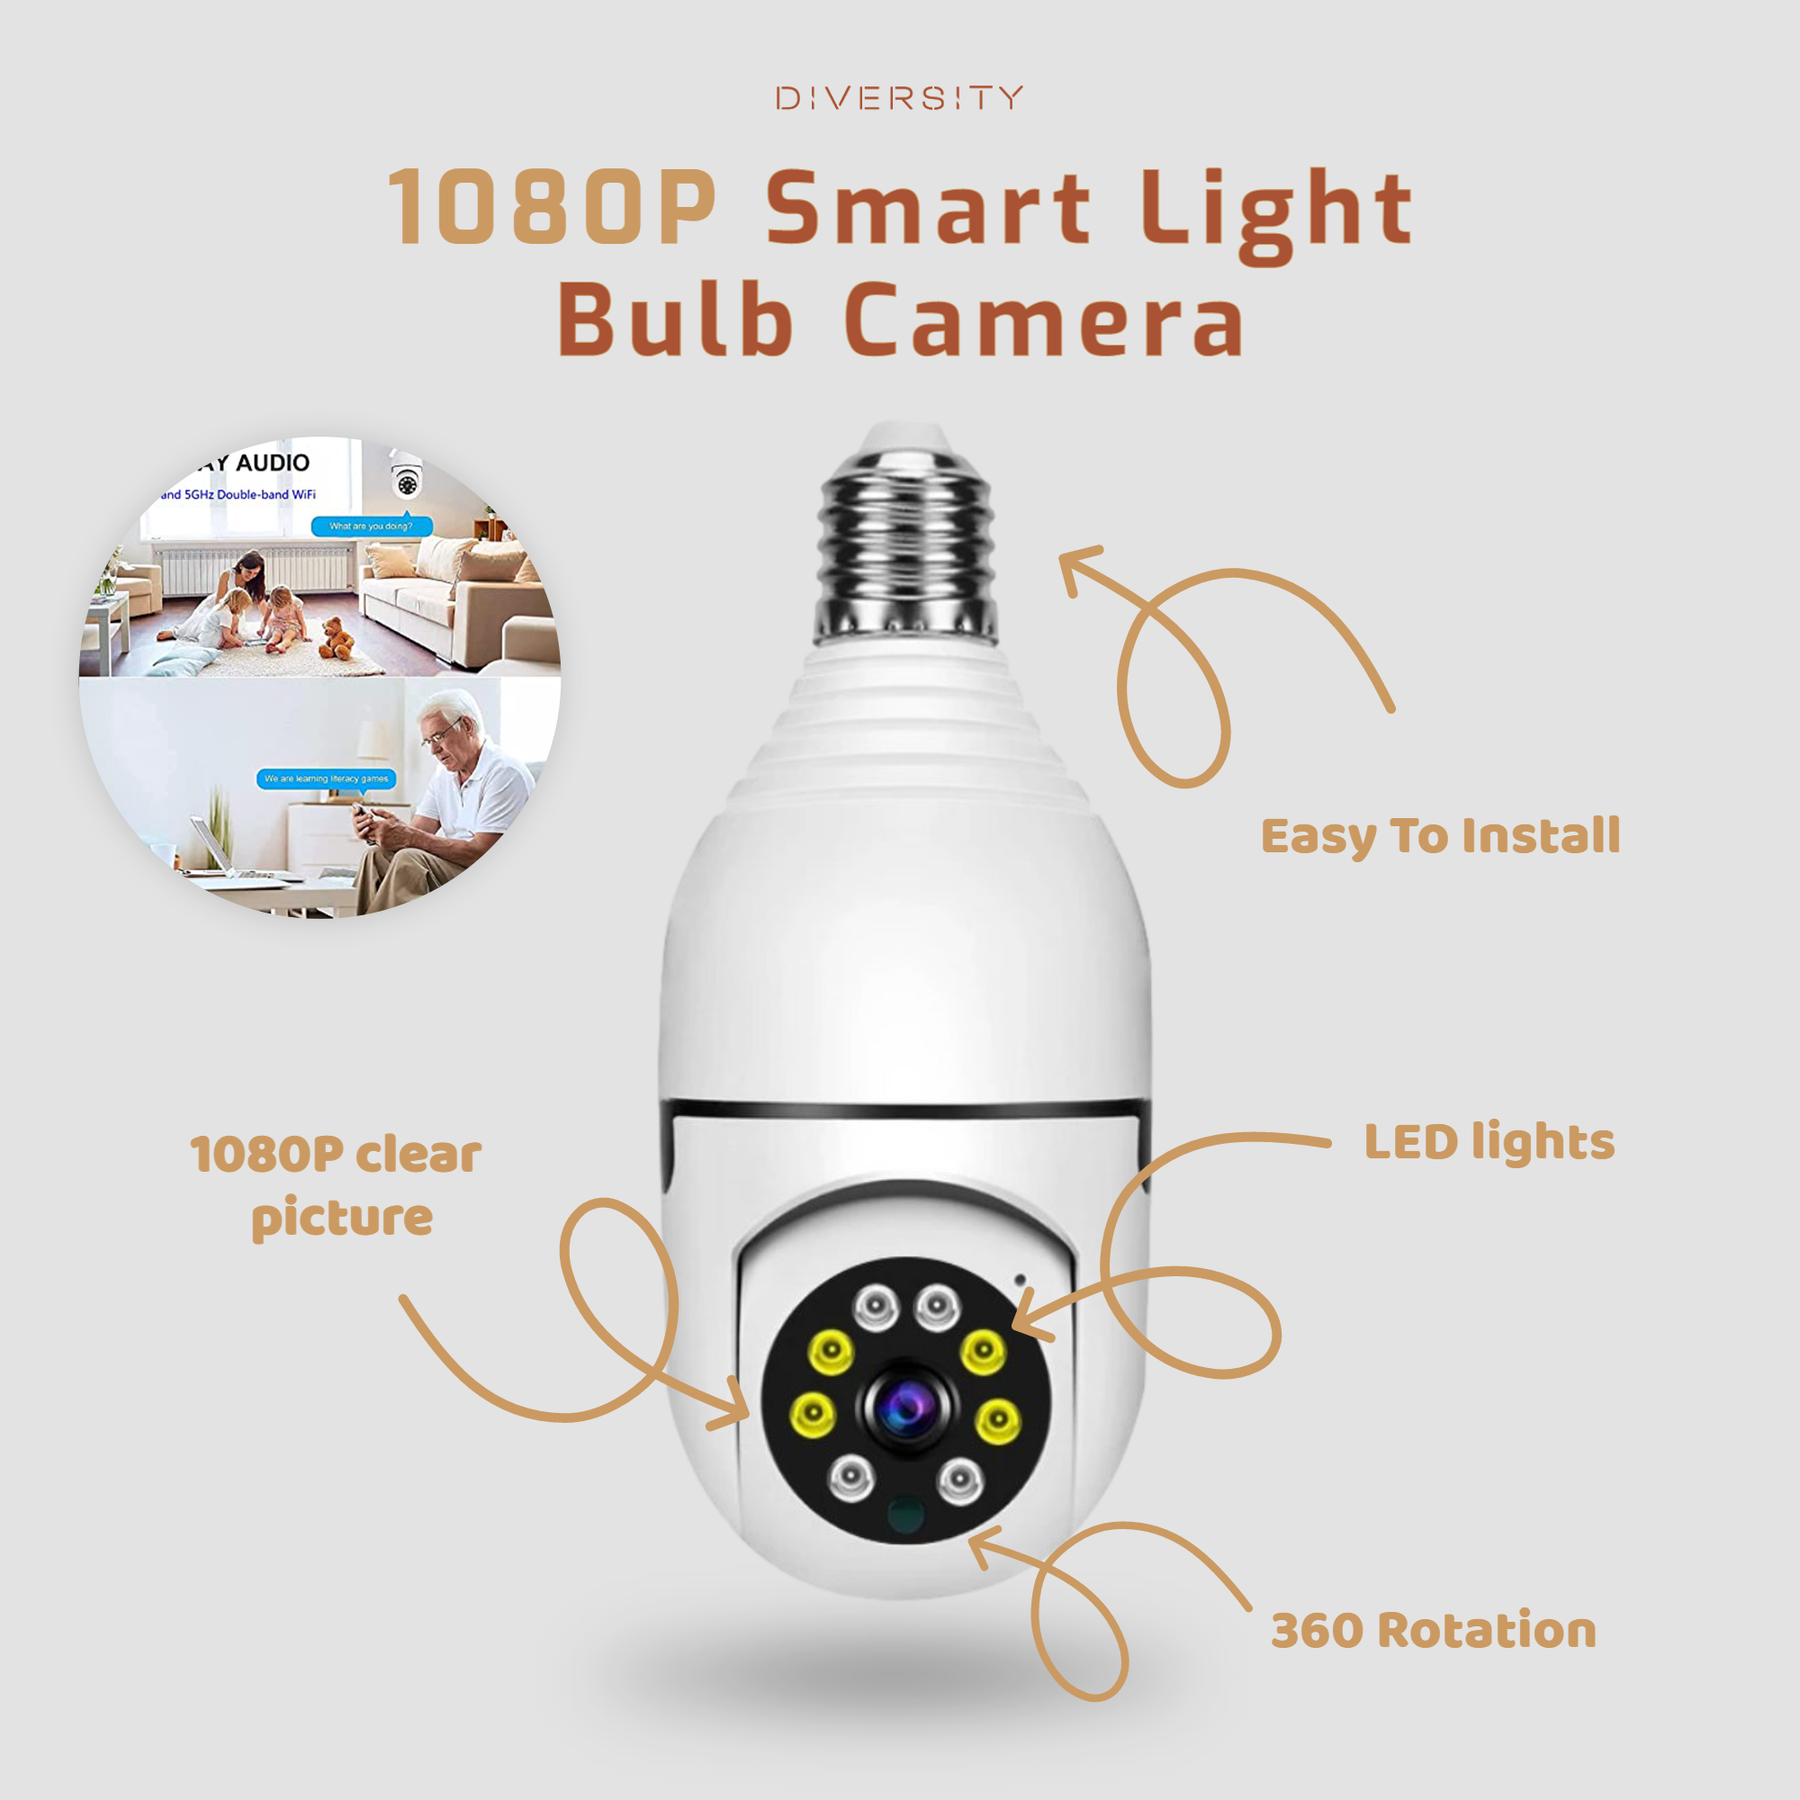 360° WiFi 1080p Bulb Camera